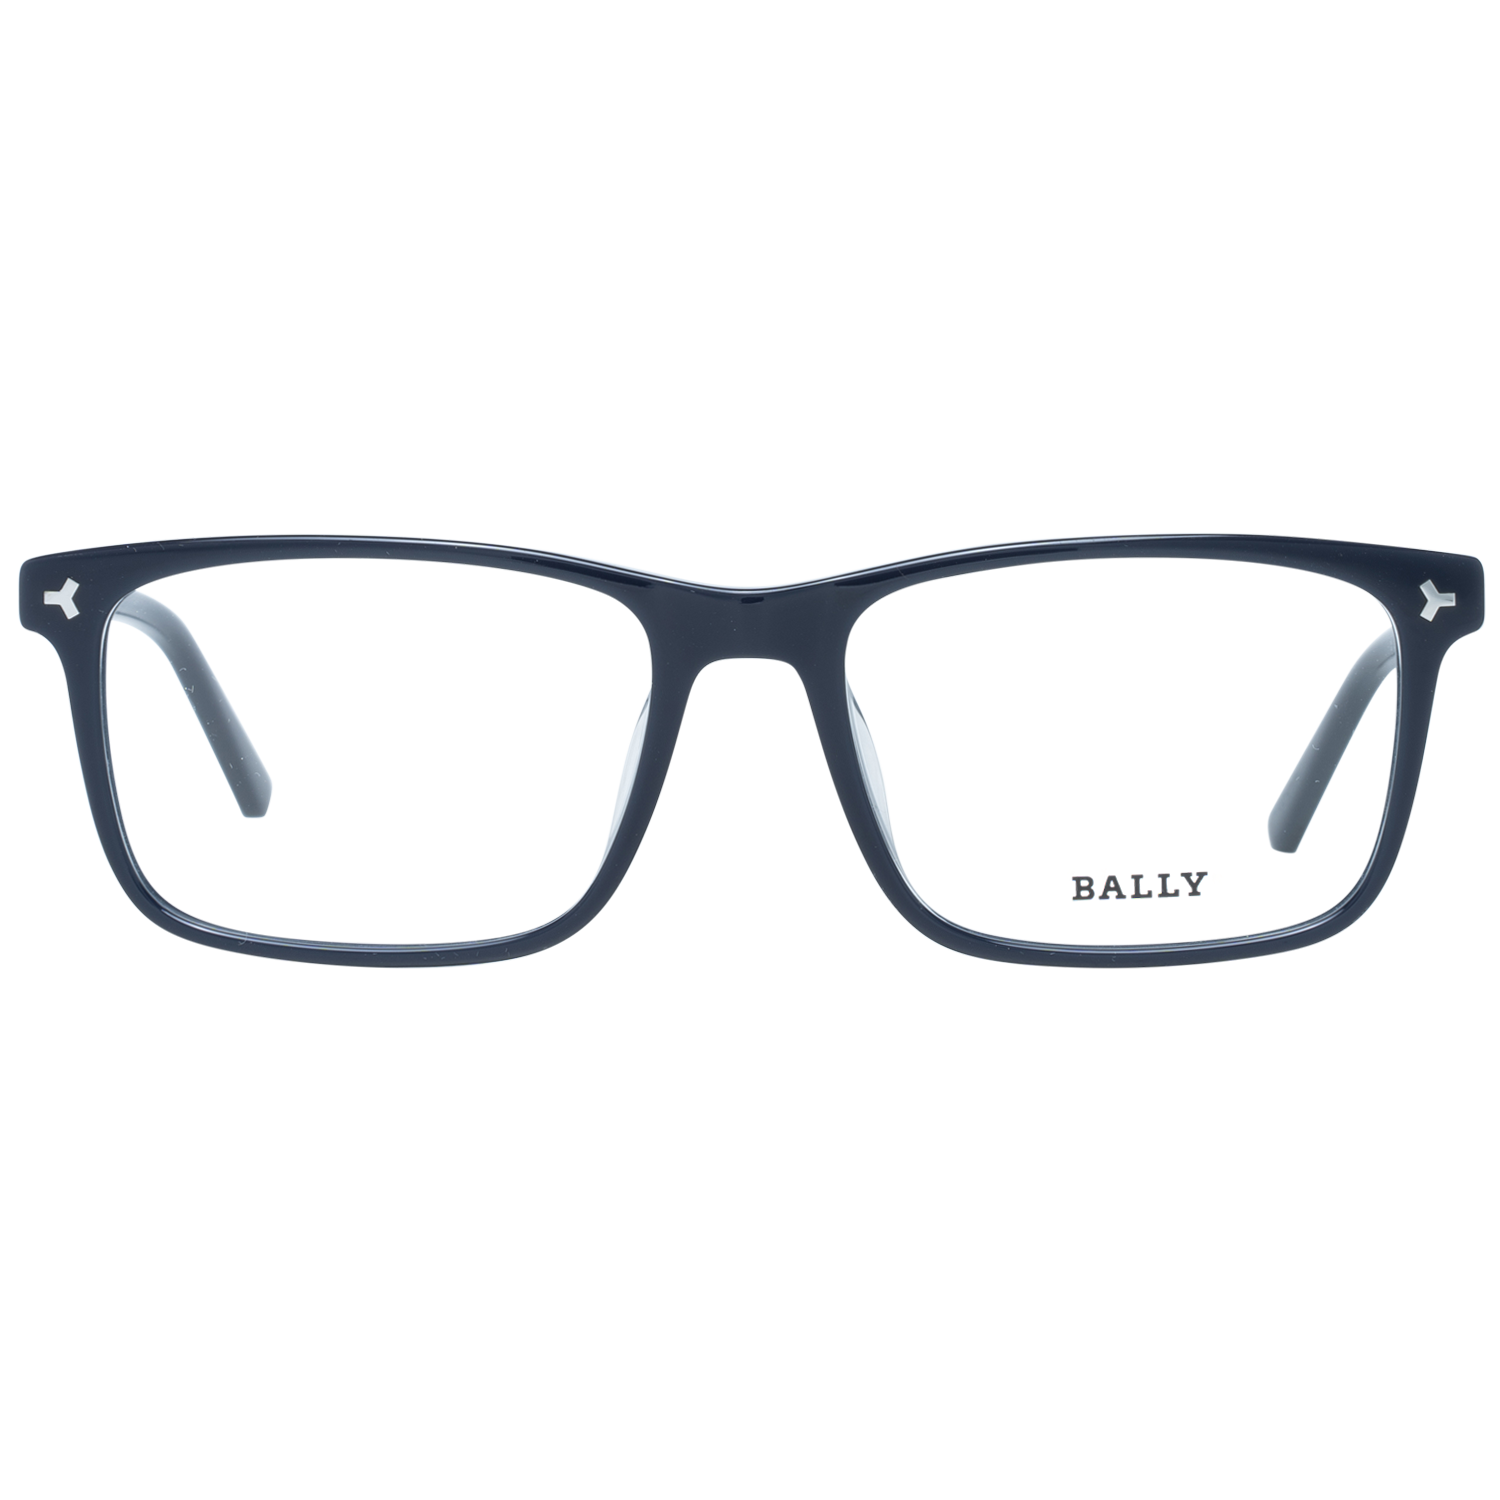 Bally Optical Frame Bally Eyeglasses Frames BY5023-H 090 54 Eyeglasses Eyewear UK USA Australia 